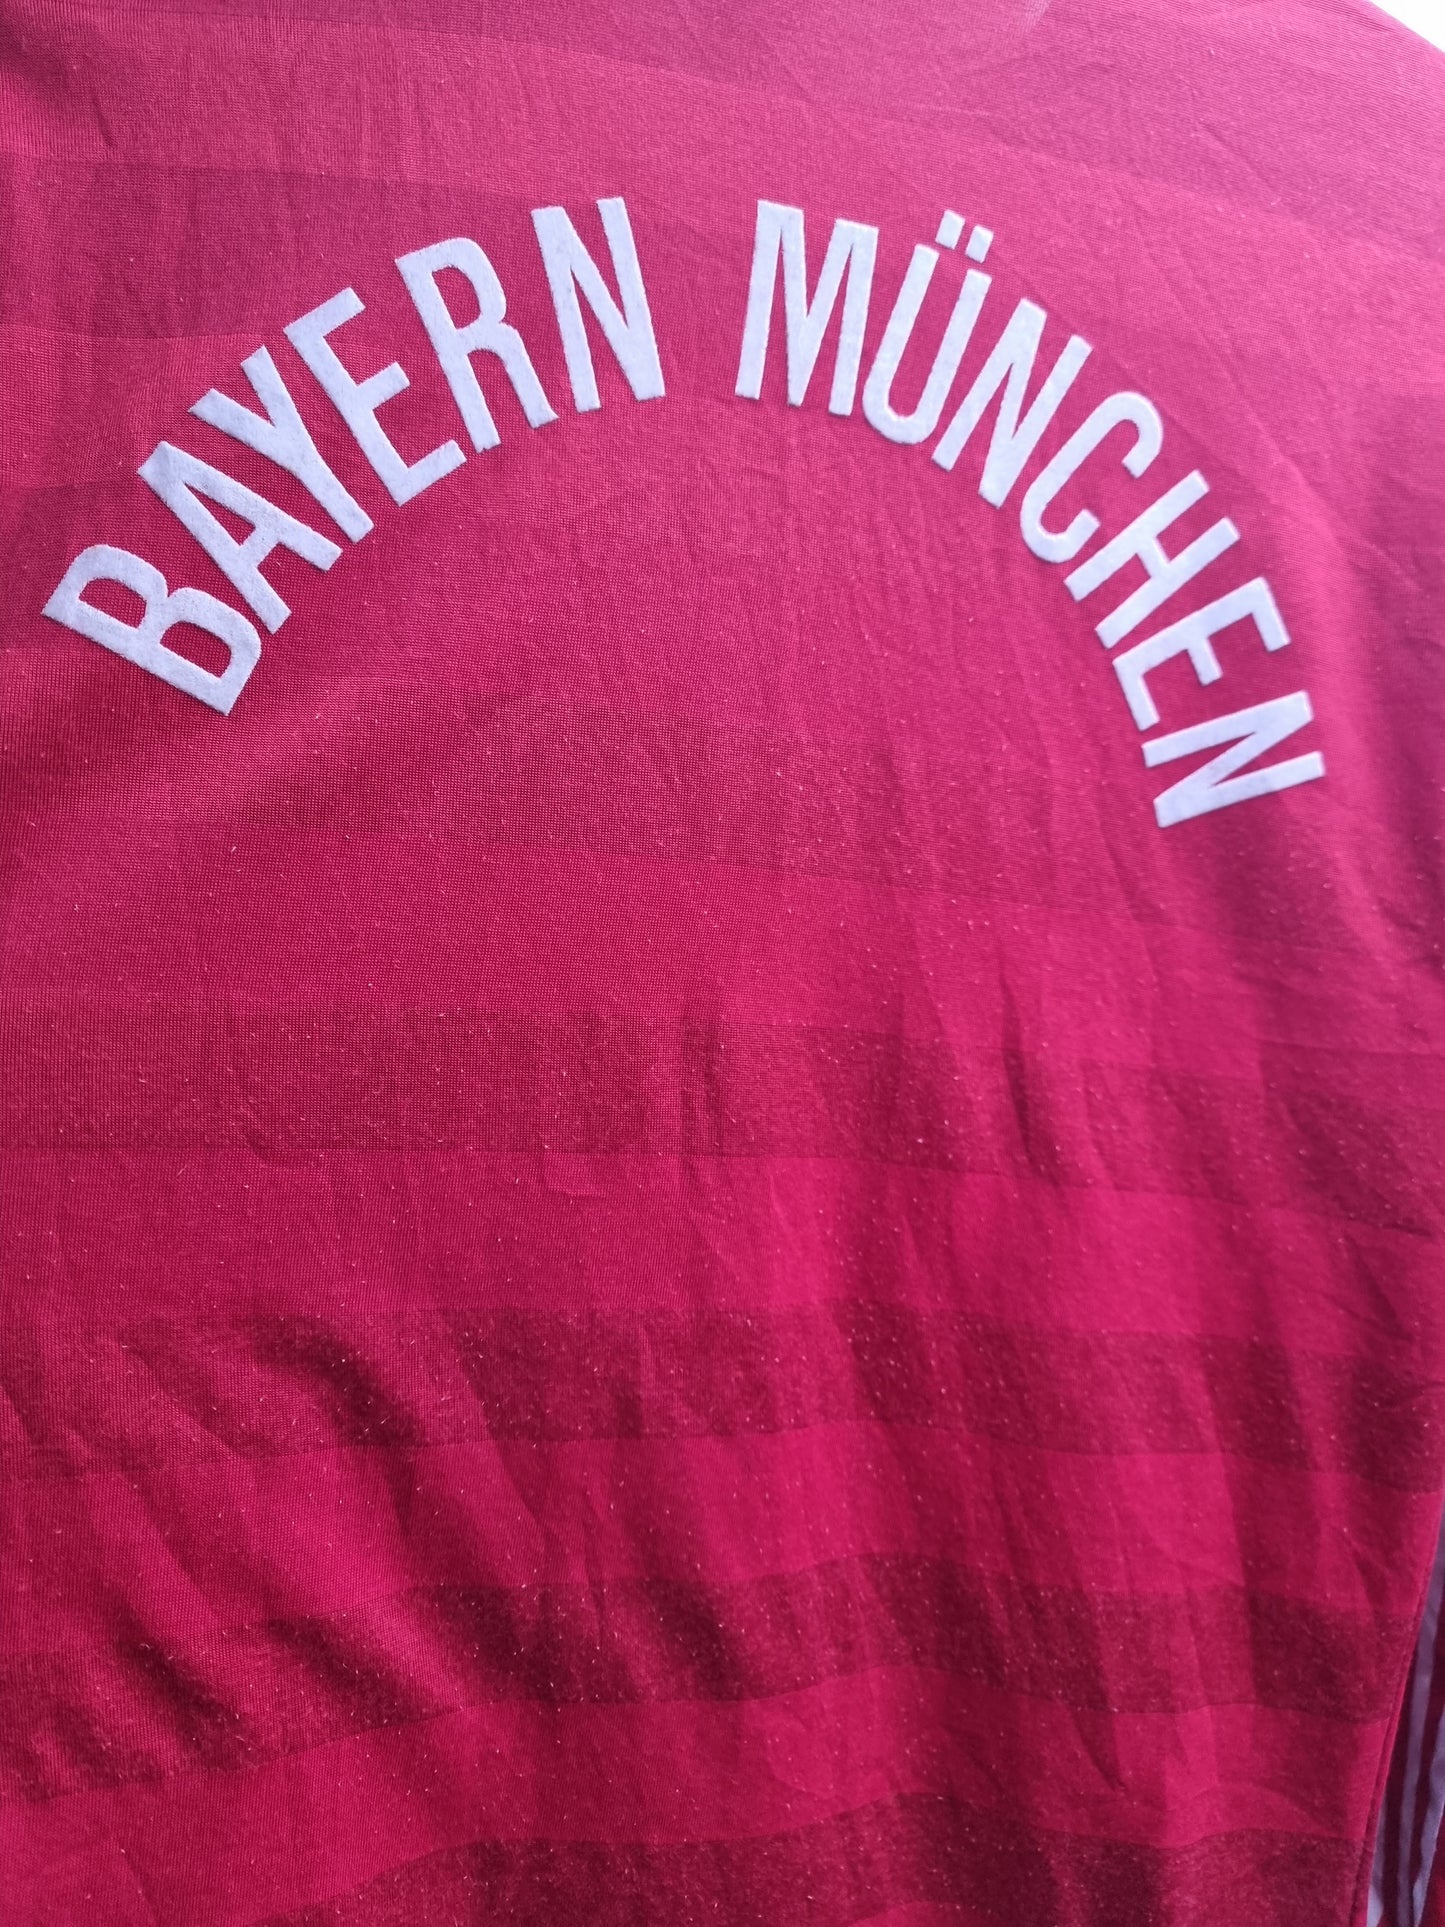 Adidas Bayern Munich 84/86 Long Sleeve Home Shirt Medium